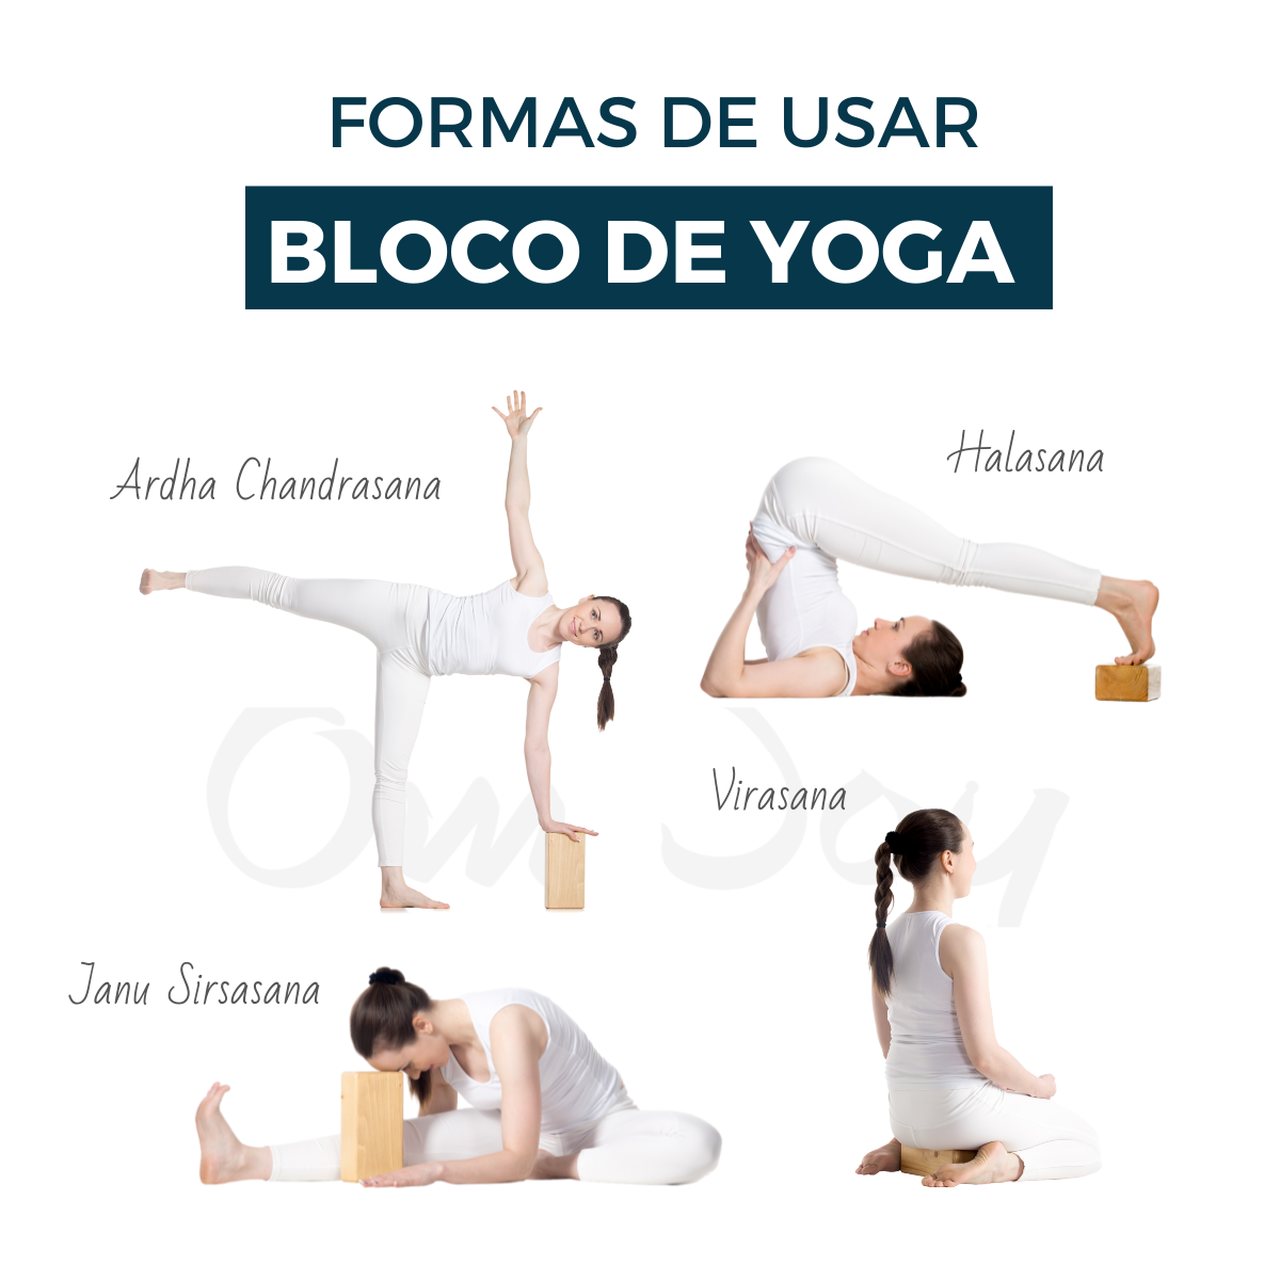 Kit 2x Bloco de Yoga em Madeira - Iyengar Props  - Om Joy